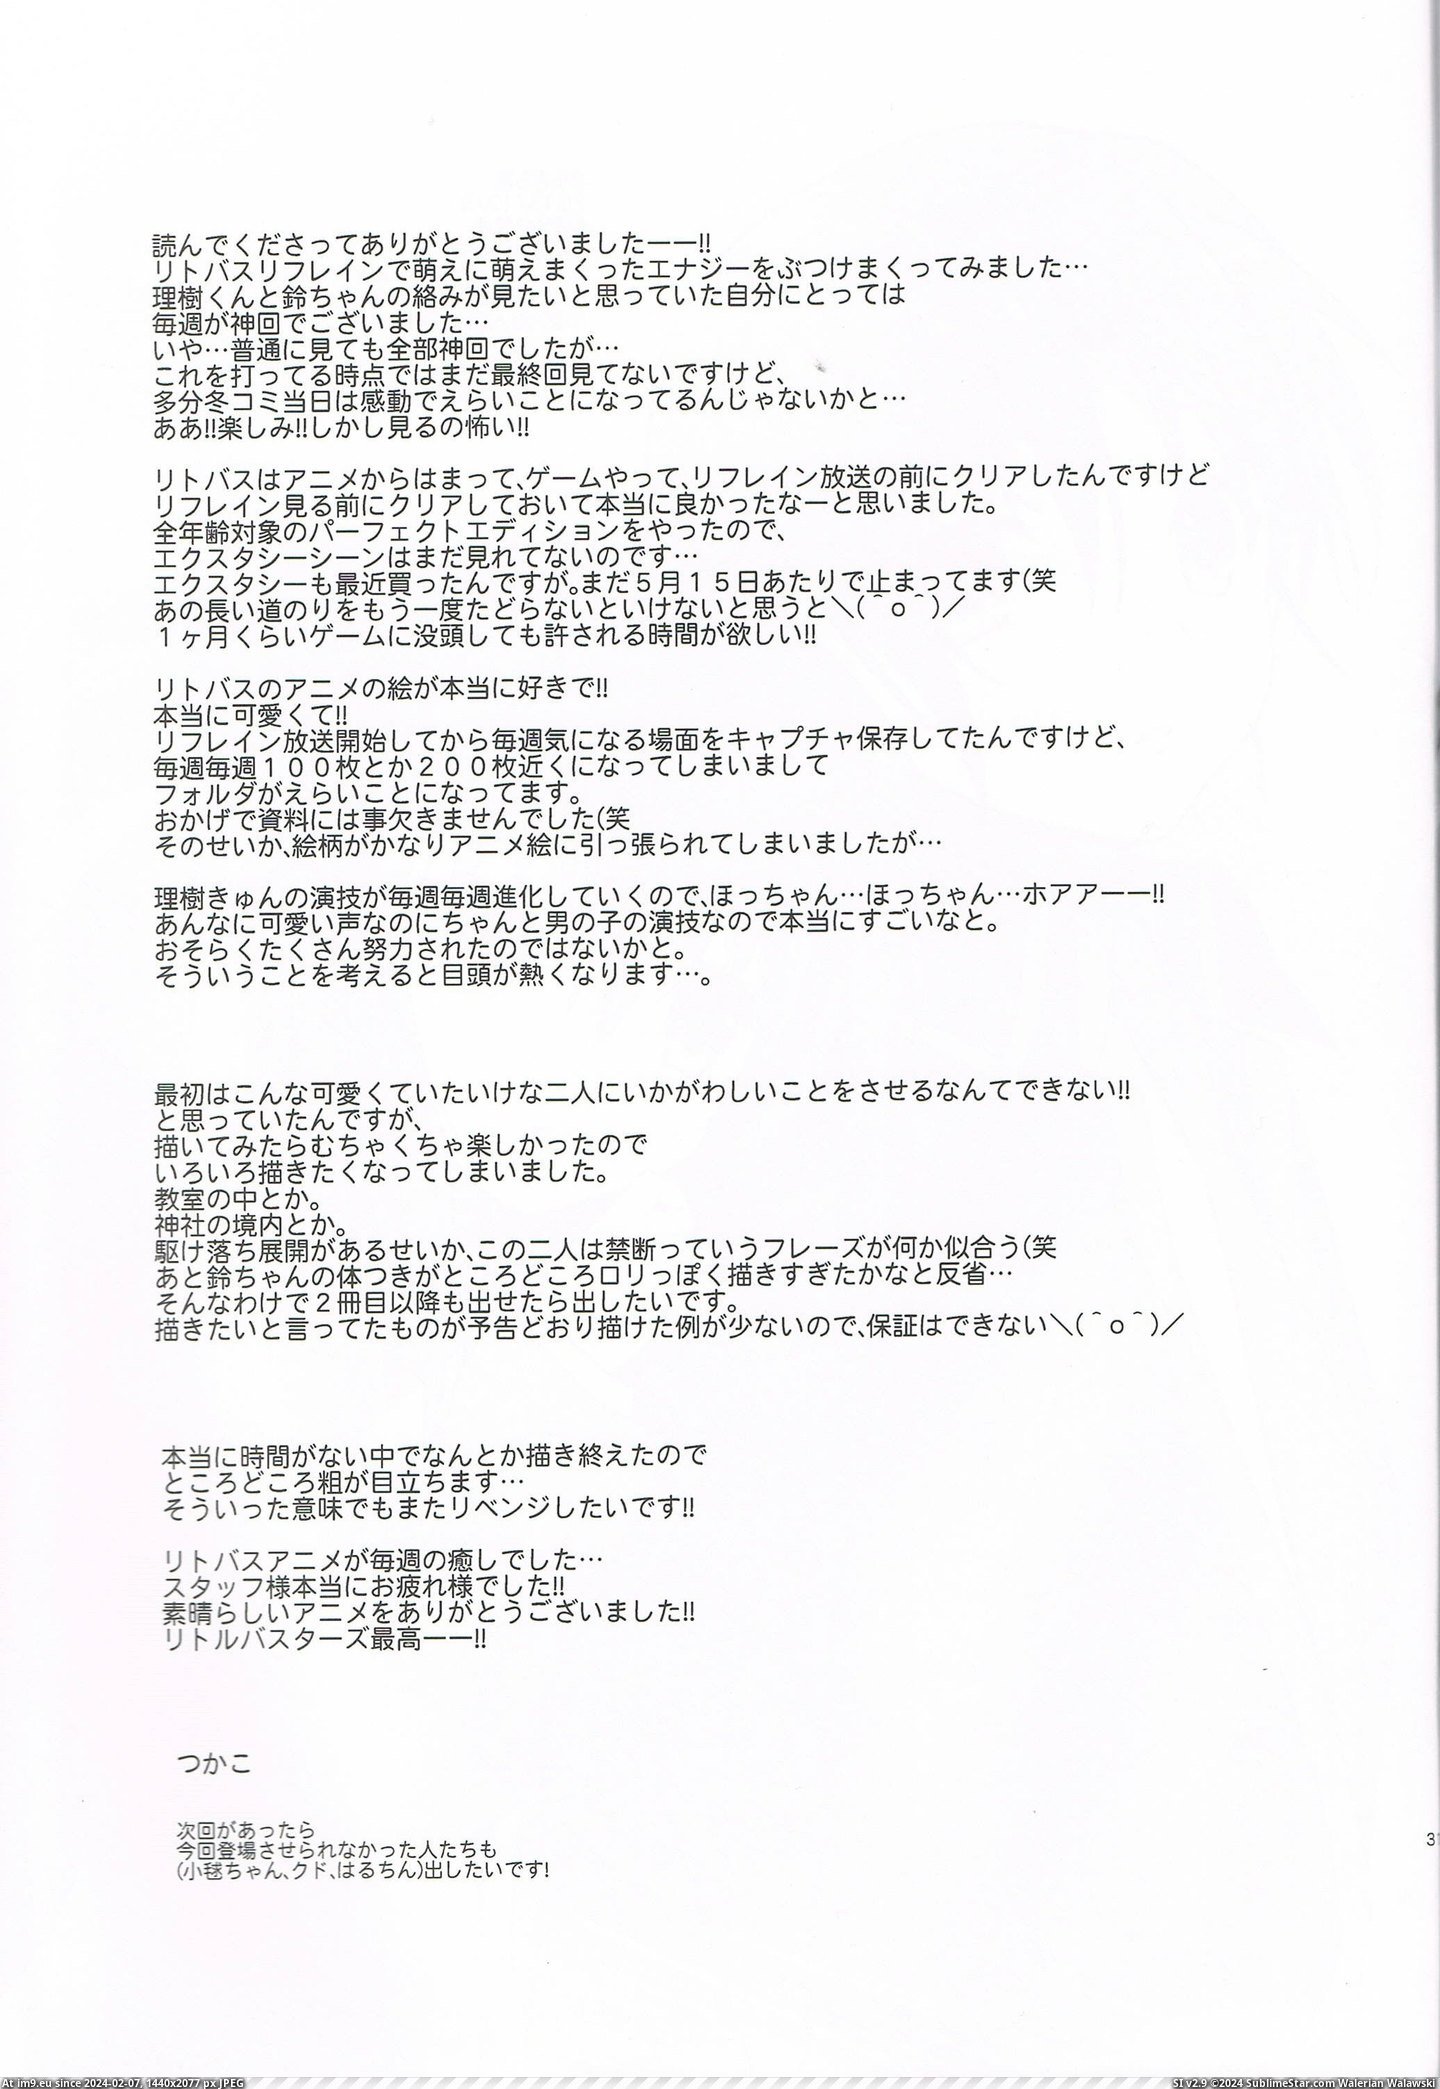 #Hentai #Busters #Saikou #Gallery [Hentai] Little Busters Saikou! (Little Busters Hentai Gallery) 62 Pic. (Image of album My r/HENTAI favs))